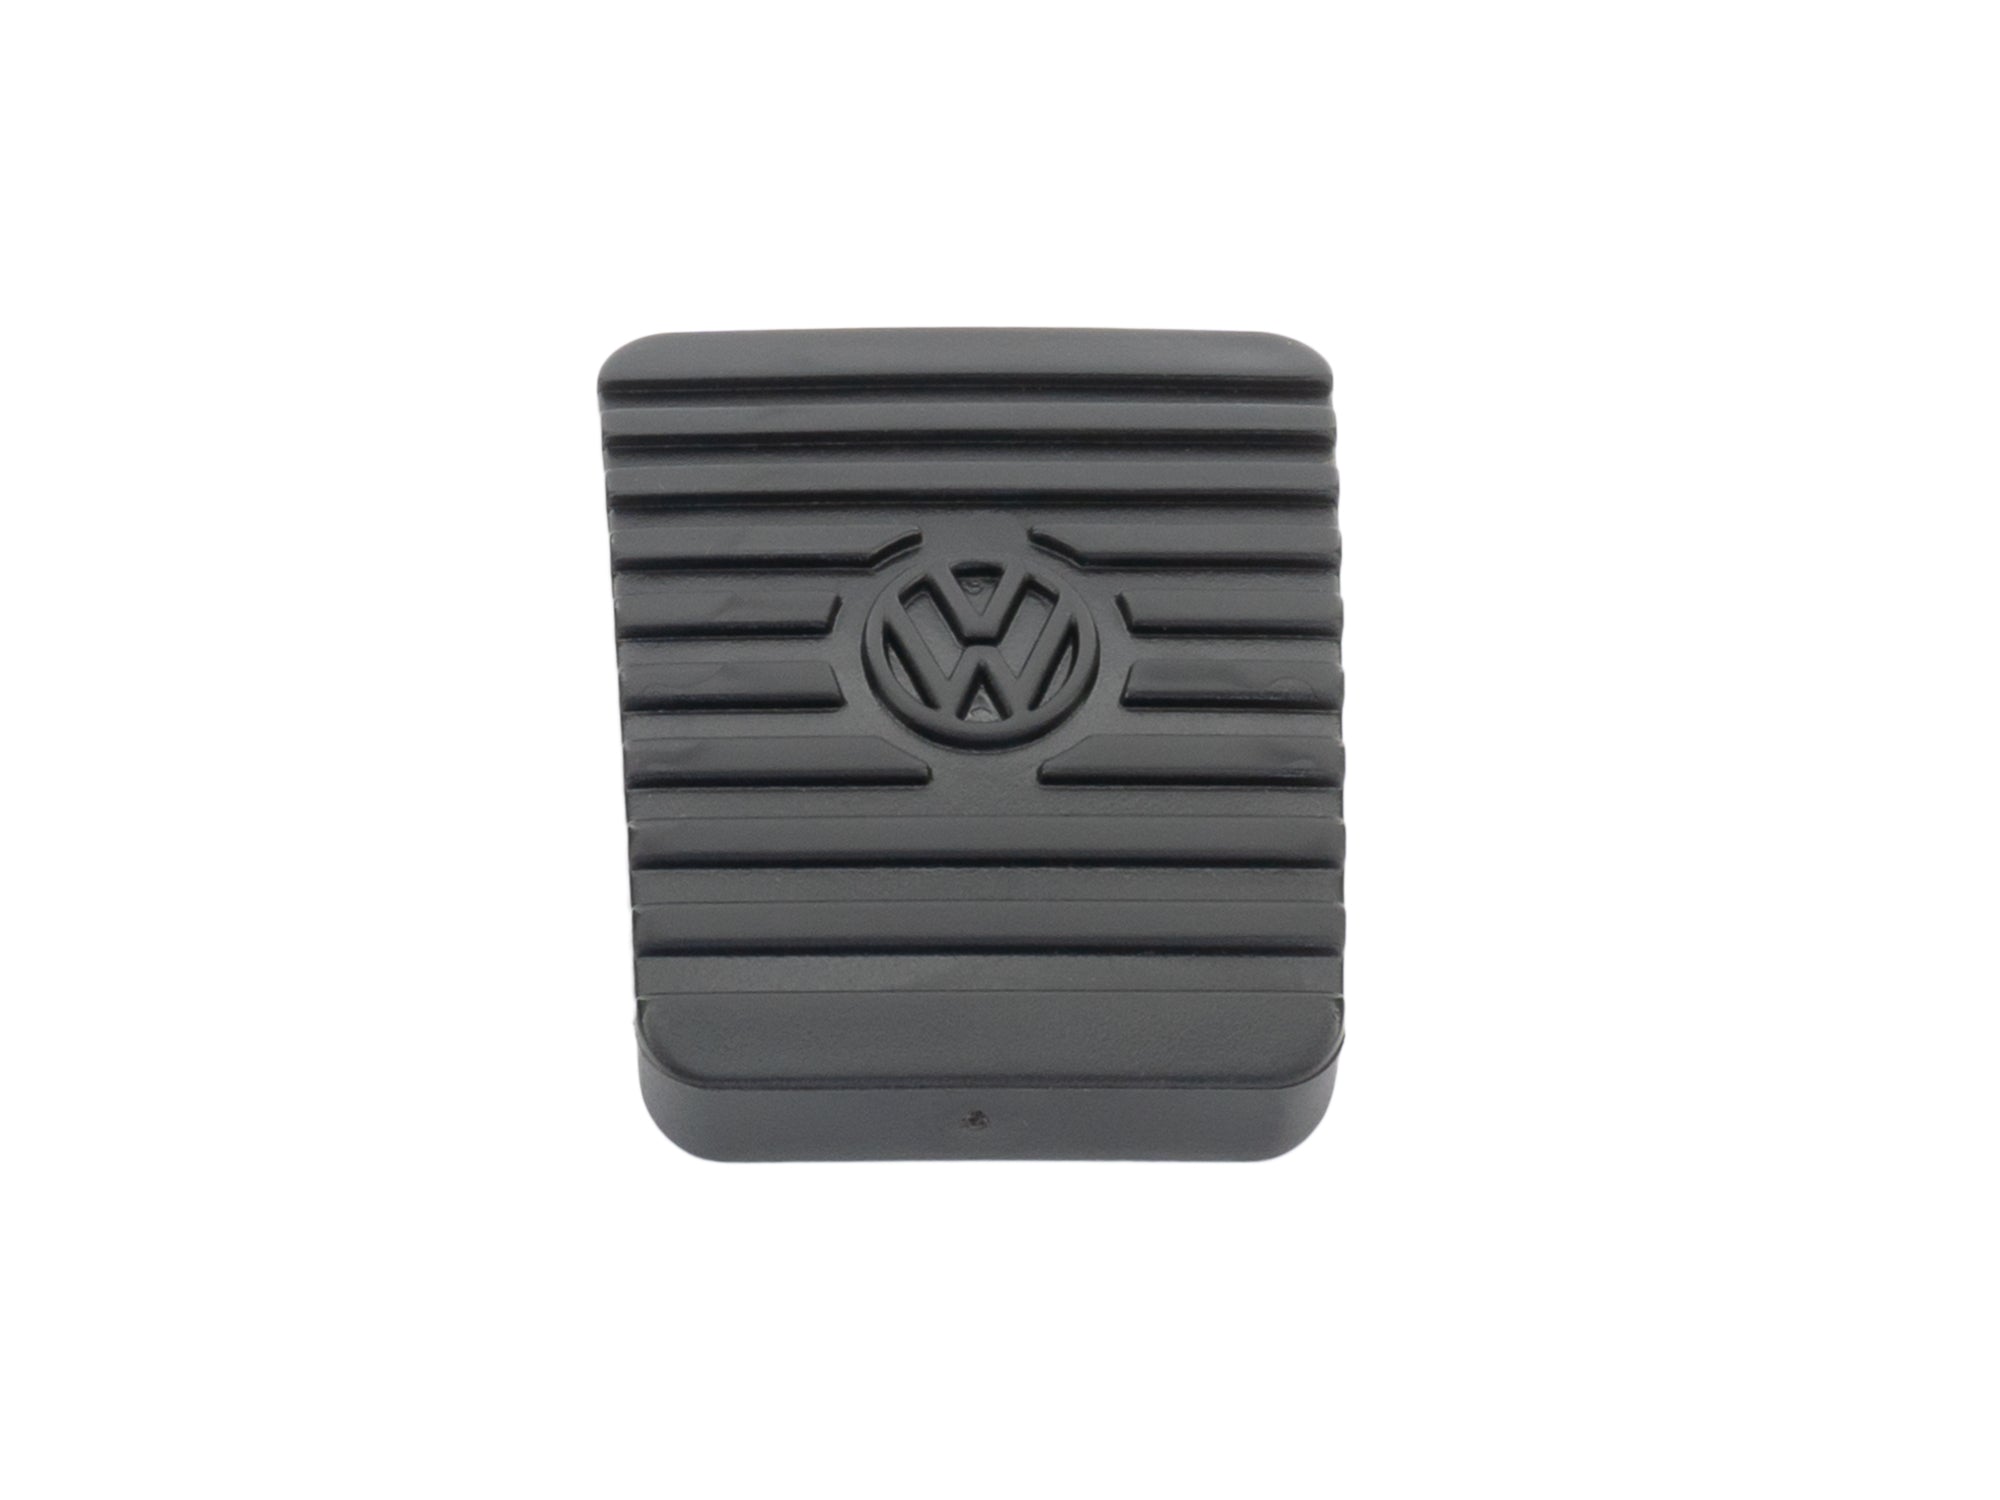 Oem german pedal pad for brake or clutch – GoWesty